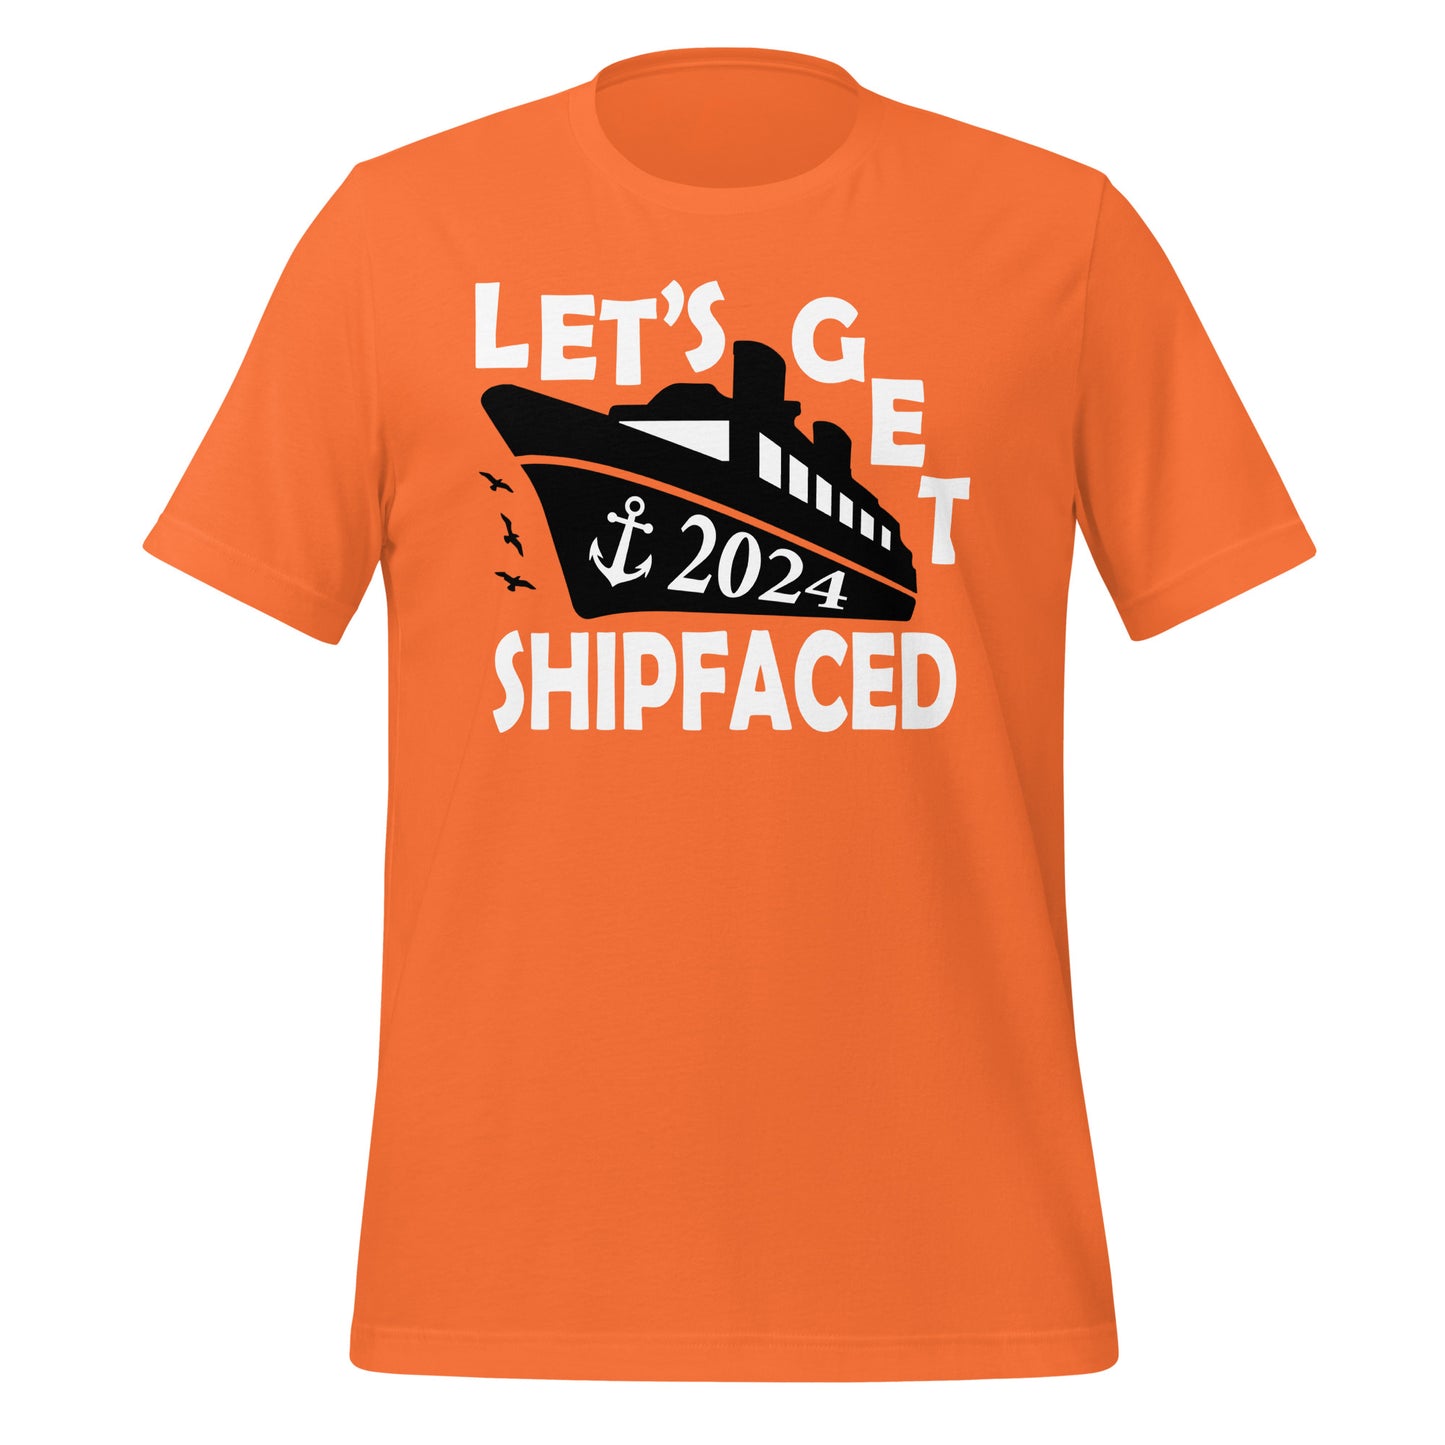 Let's Get Shipfaced 2024 Unisex T-Shirt Designed by Dog Artistry